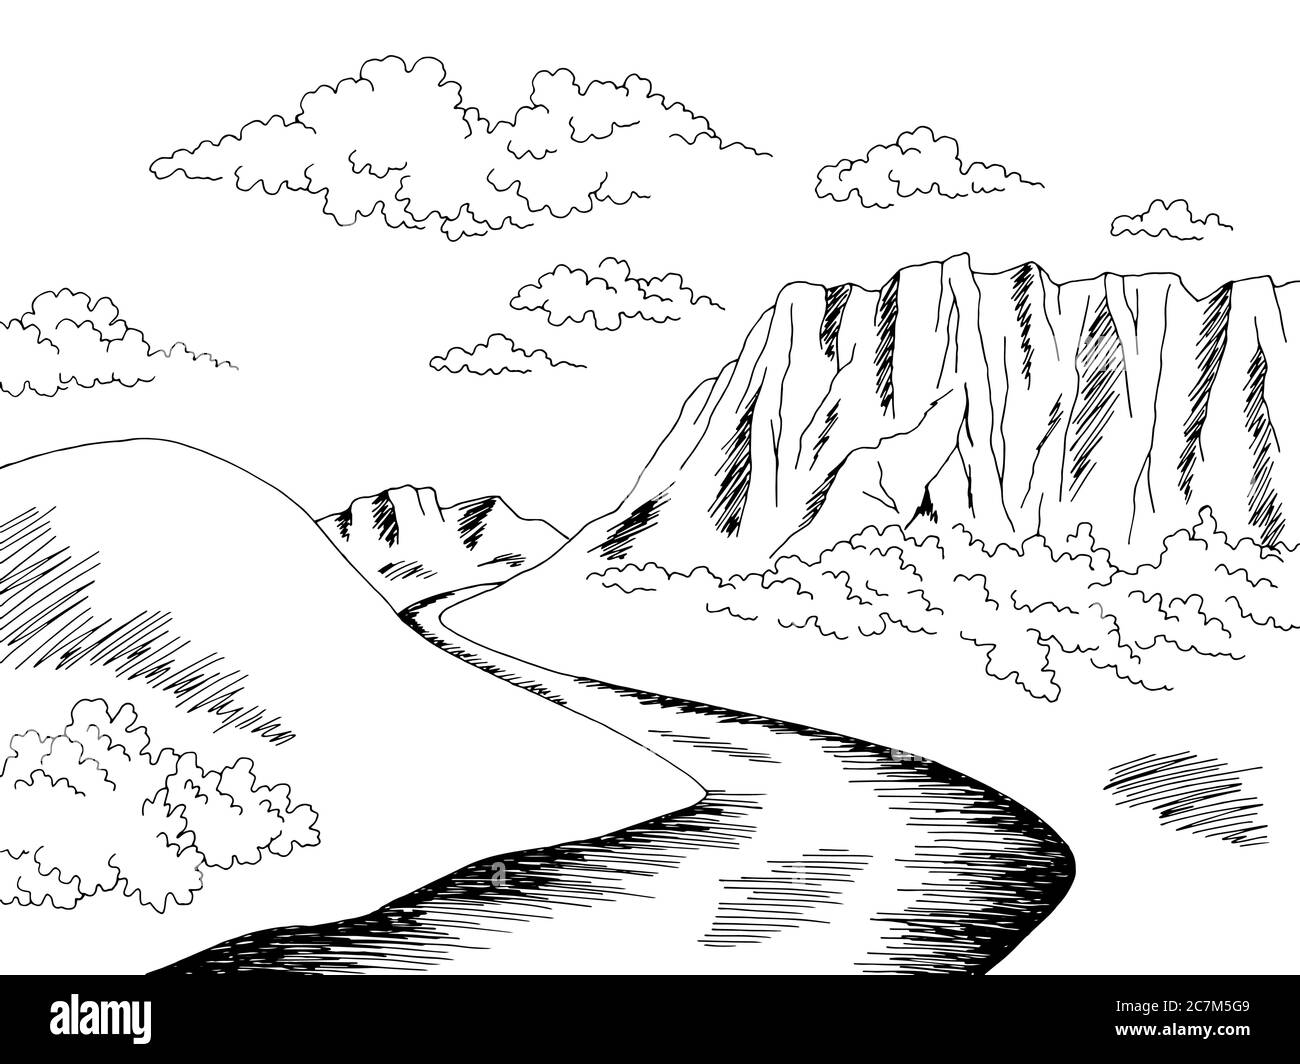 Meseta tableland montaña río gráfico blanco negro paisaje dibujo vector  ilustración Imagen Vector de stock - Alamy